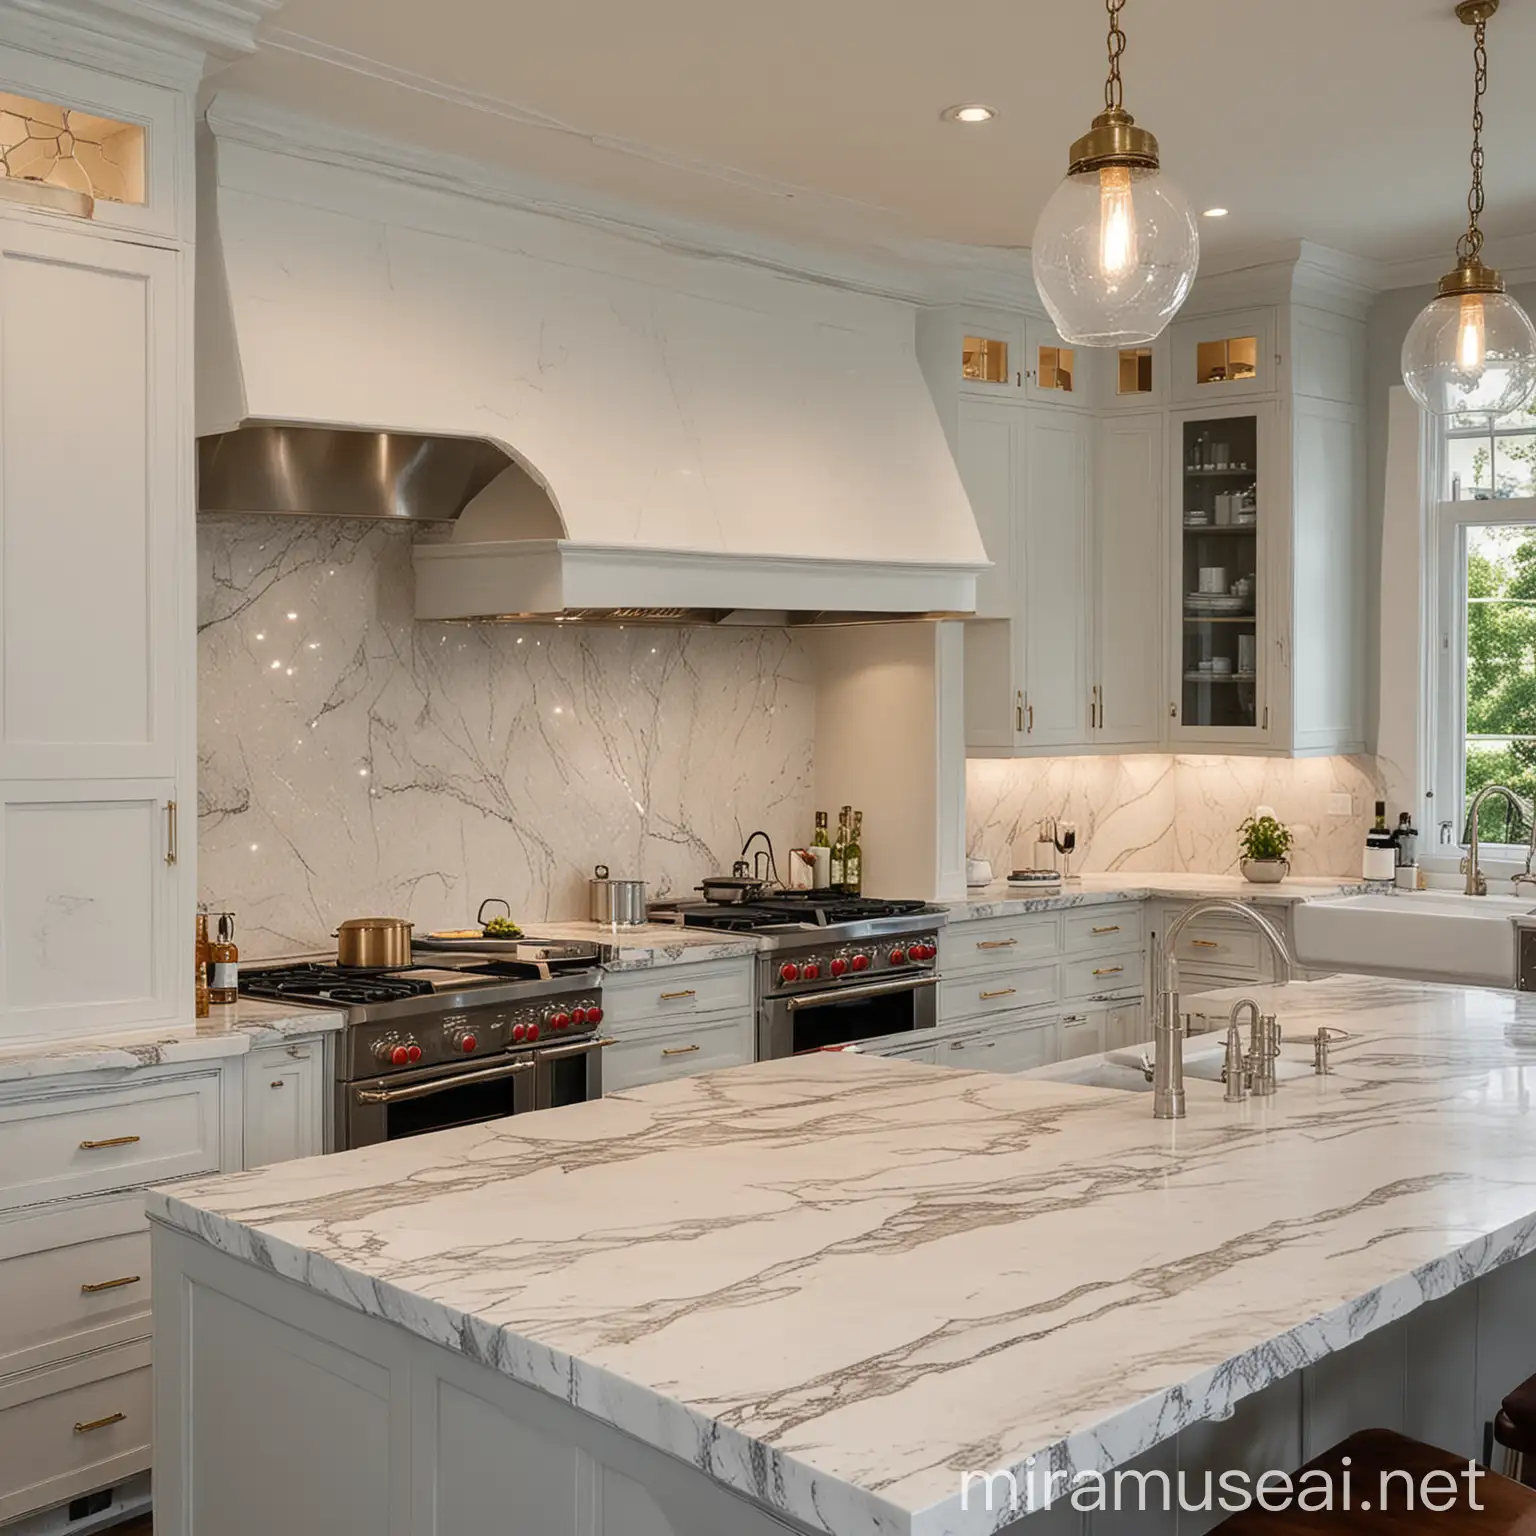 luxury vintage modern 
kitchen 
Quartzite countertops
inset cabinets

